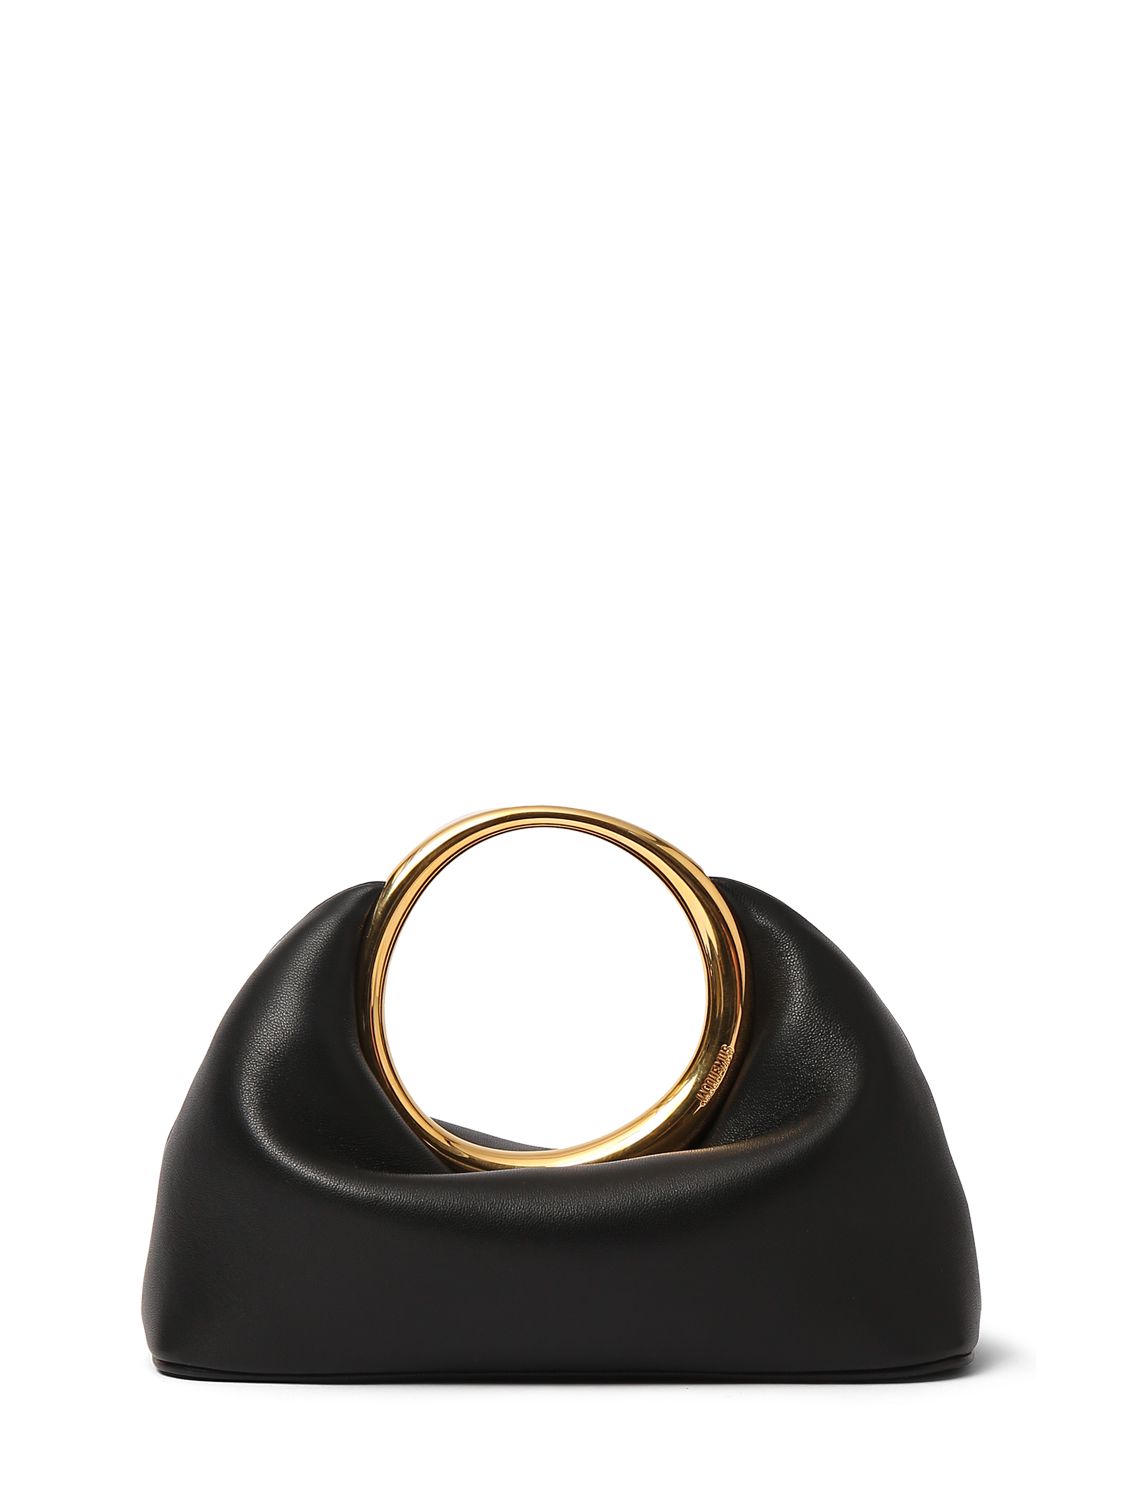 Jacquemus Le Petit Calino Leather Top Handle Bag In Black